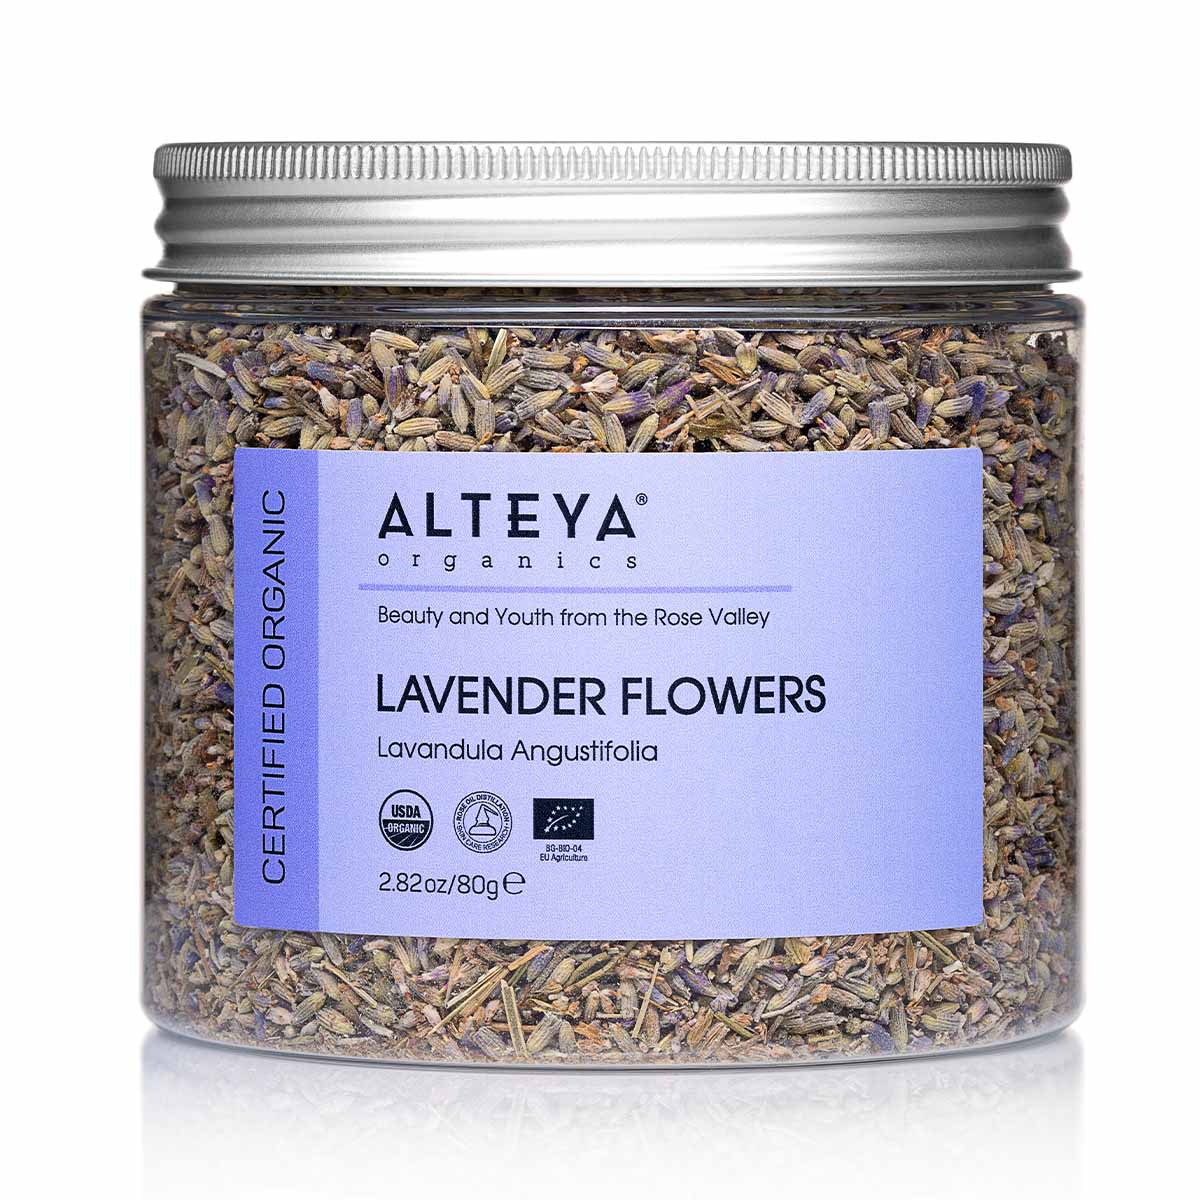 An Alteya Organics jar of Organic Lavender Dry Flowers on a white background.